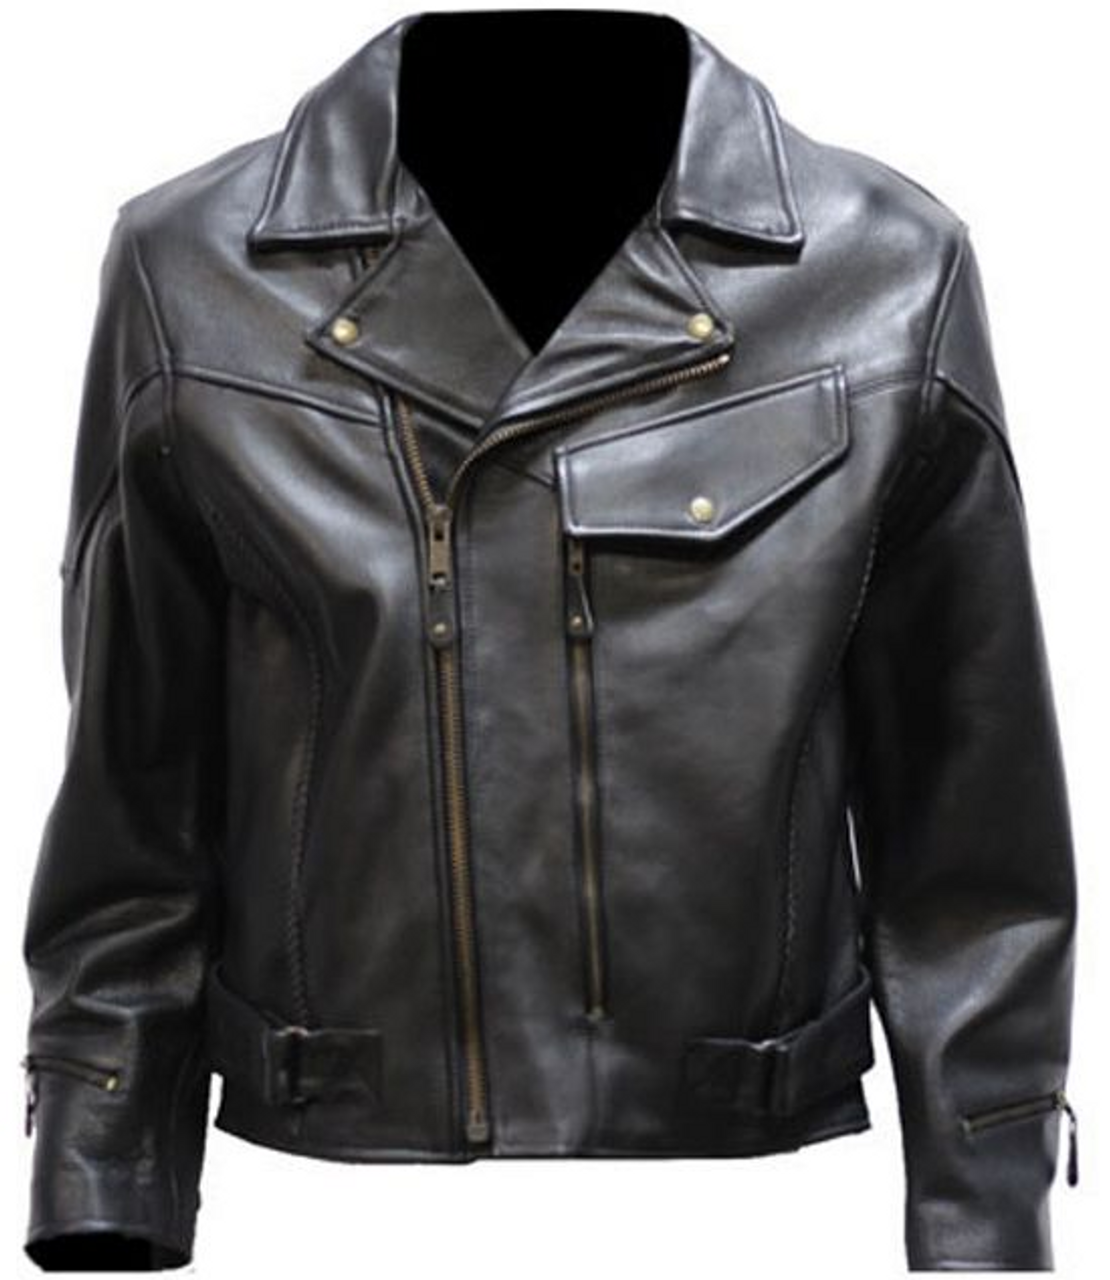 Men's Braided Pistol Pete Leather Motorcycle Jacket - SKU MJ708-SS-DL